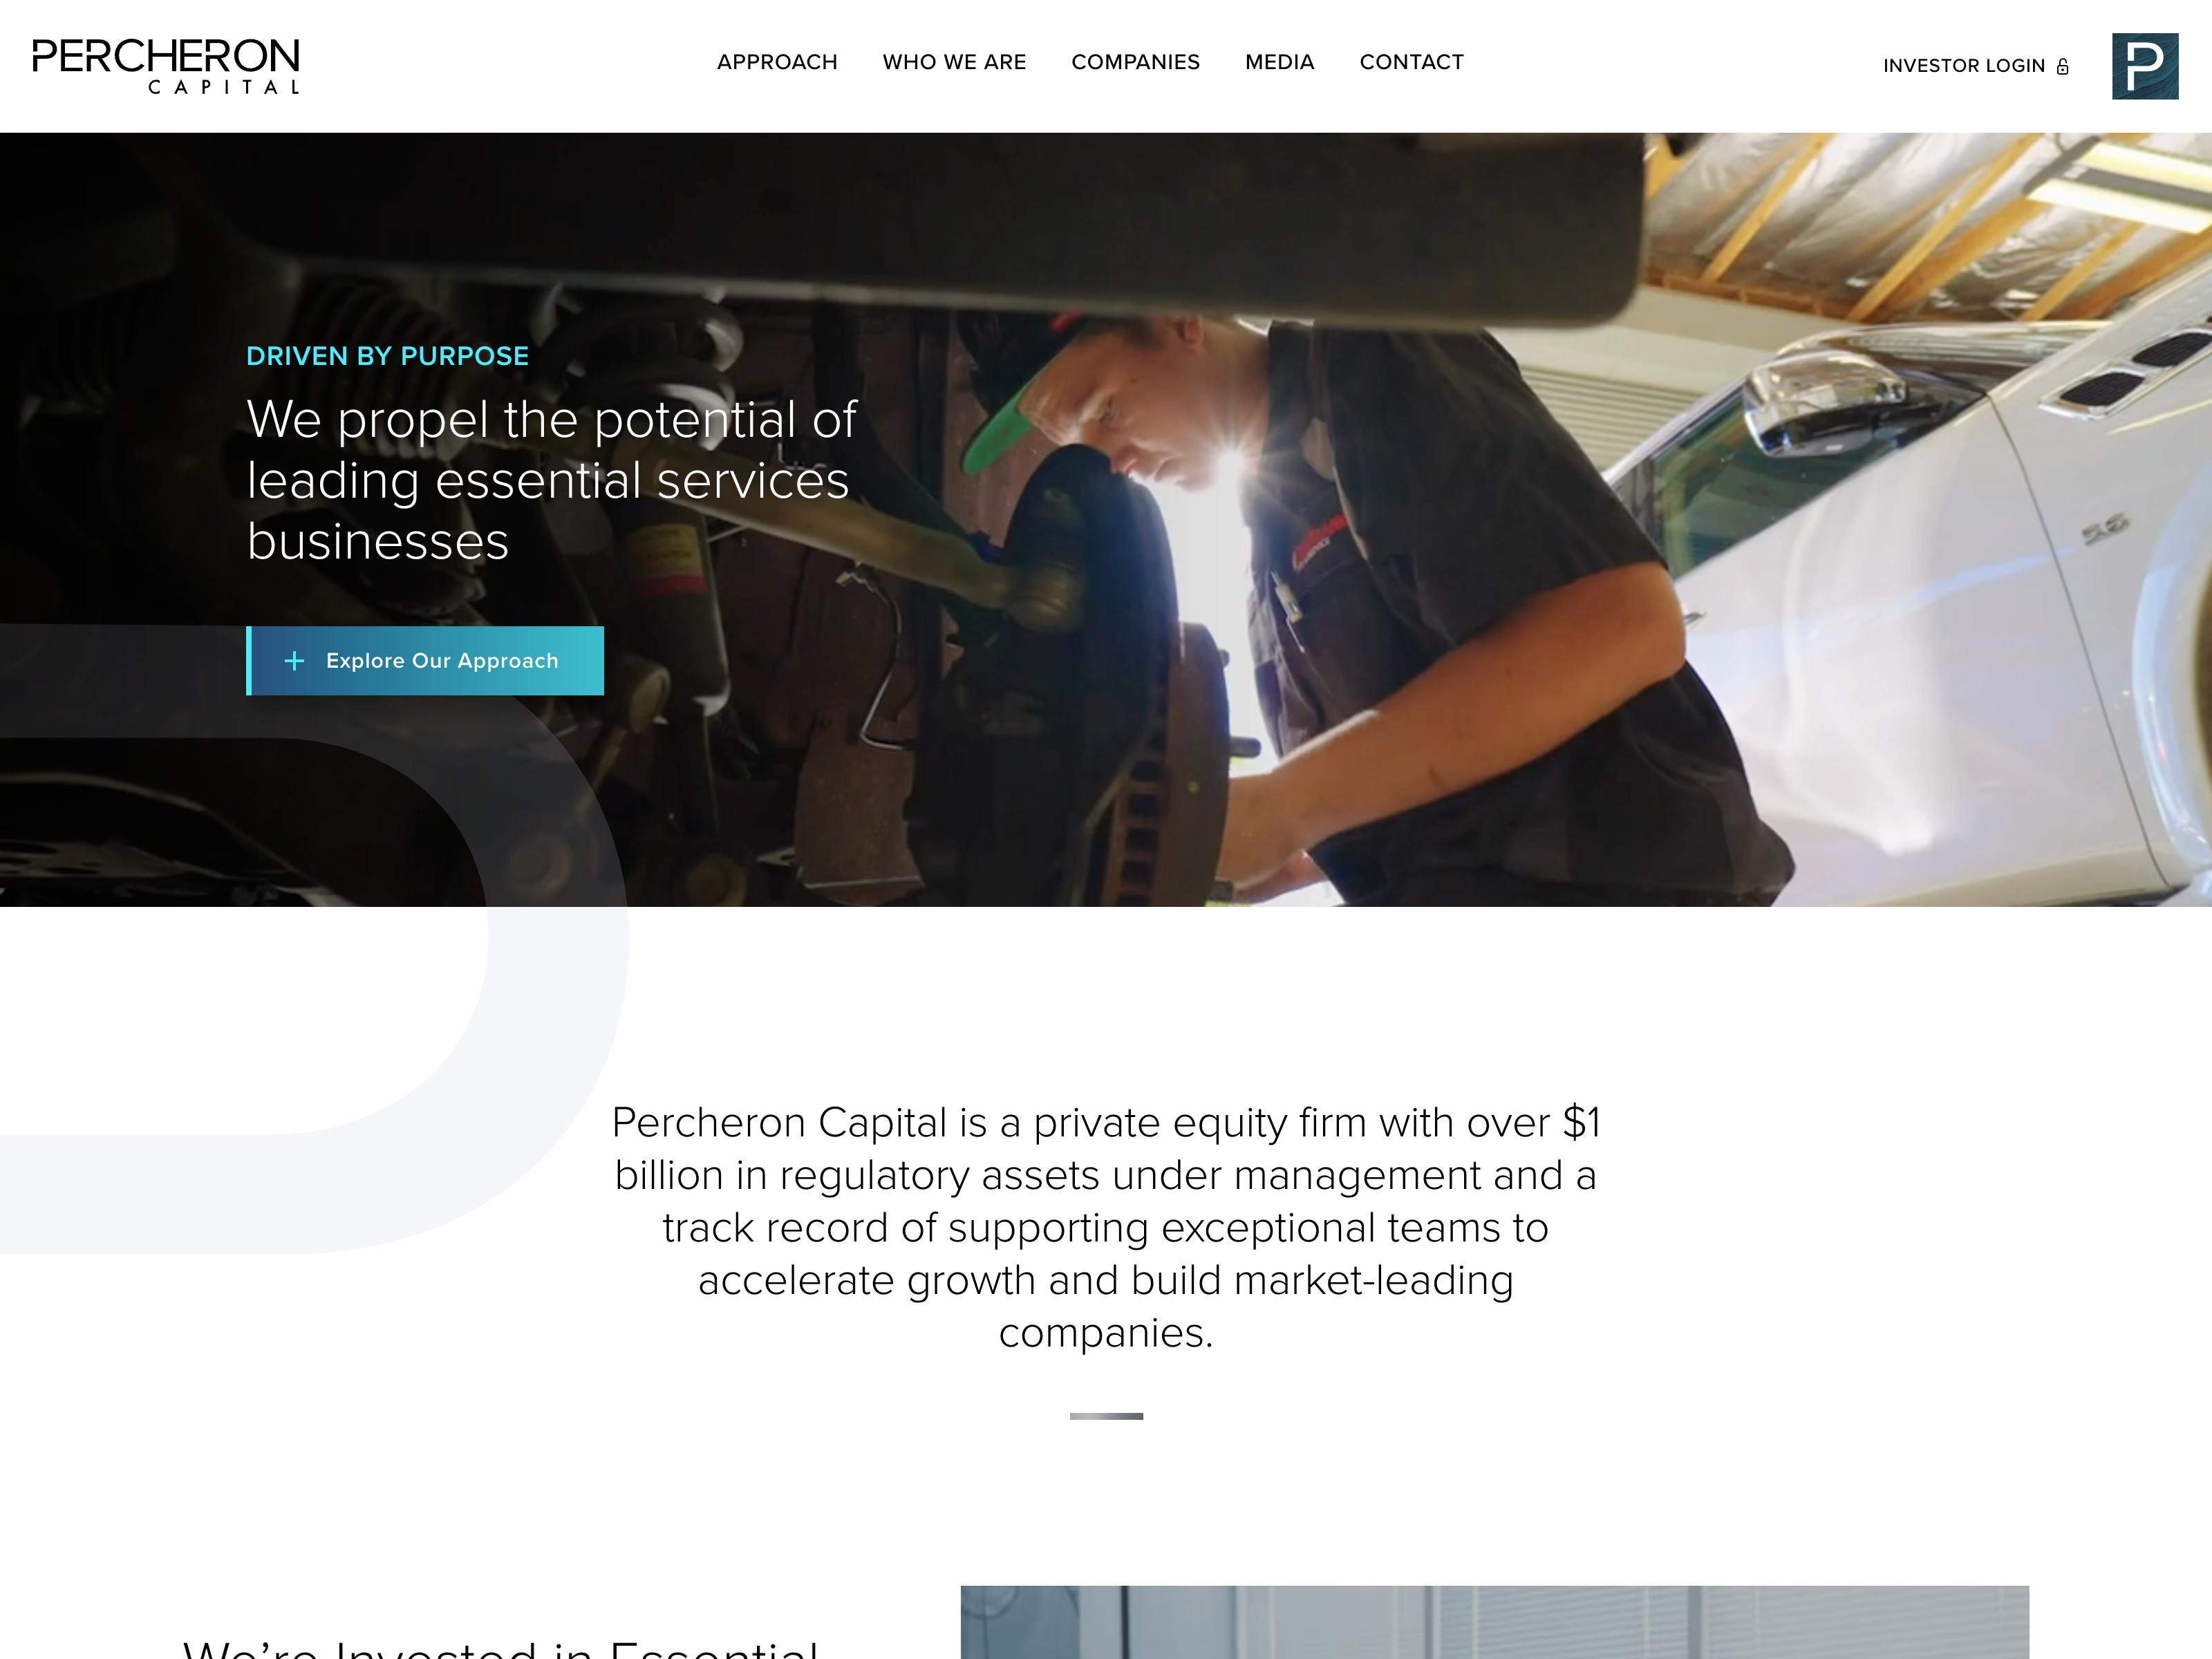 Percheron Capital website screenshot